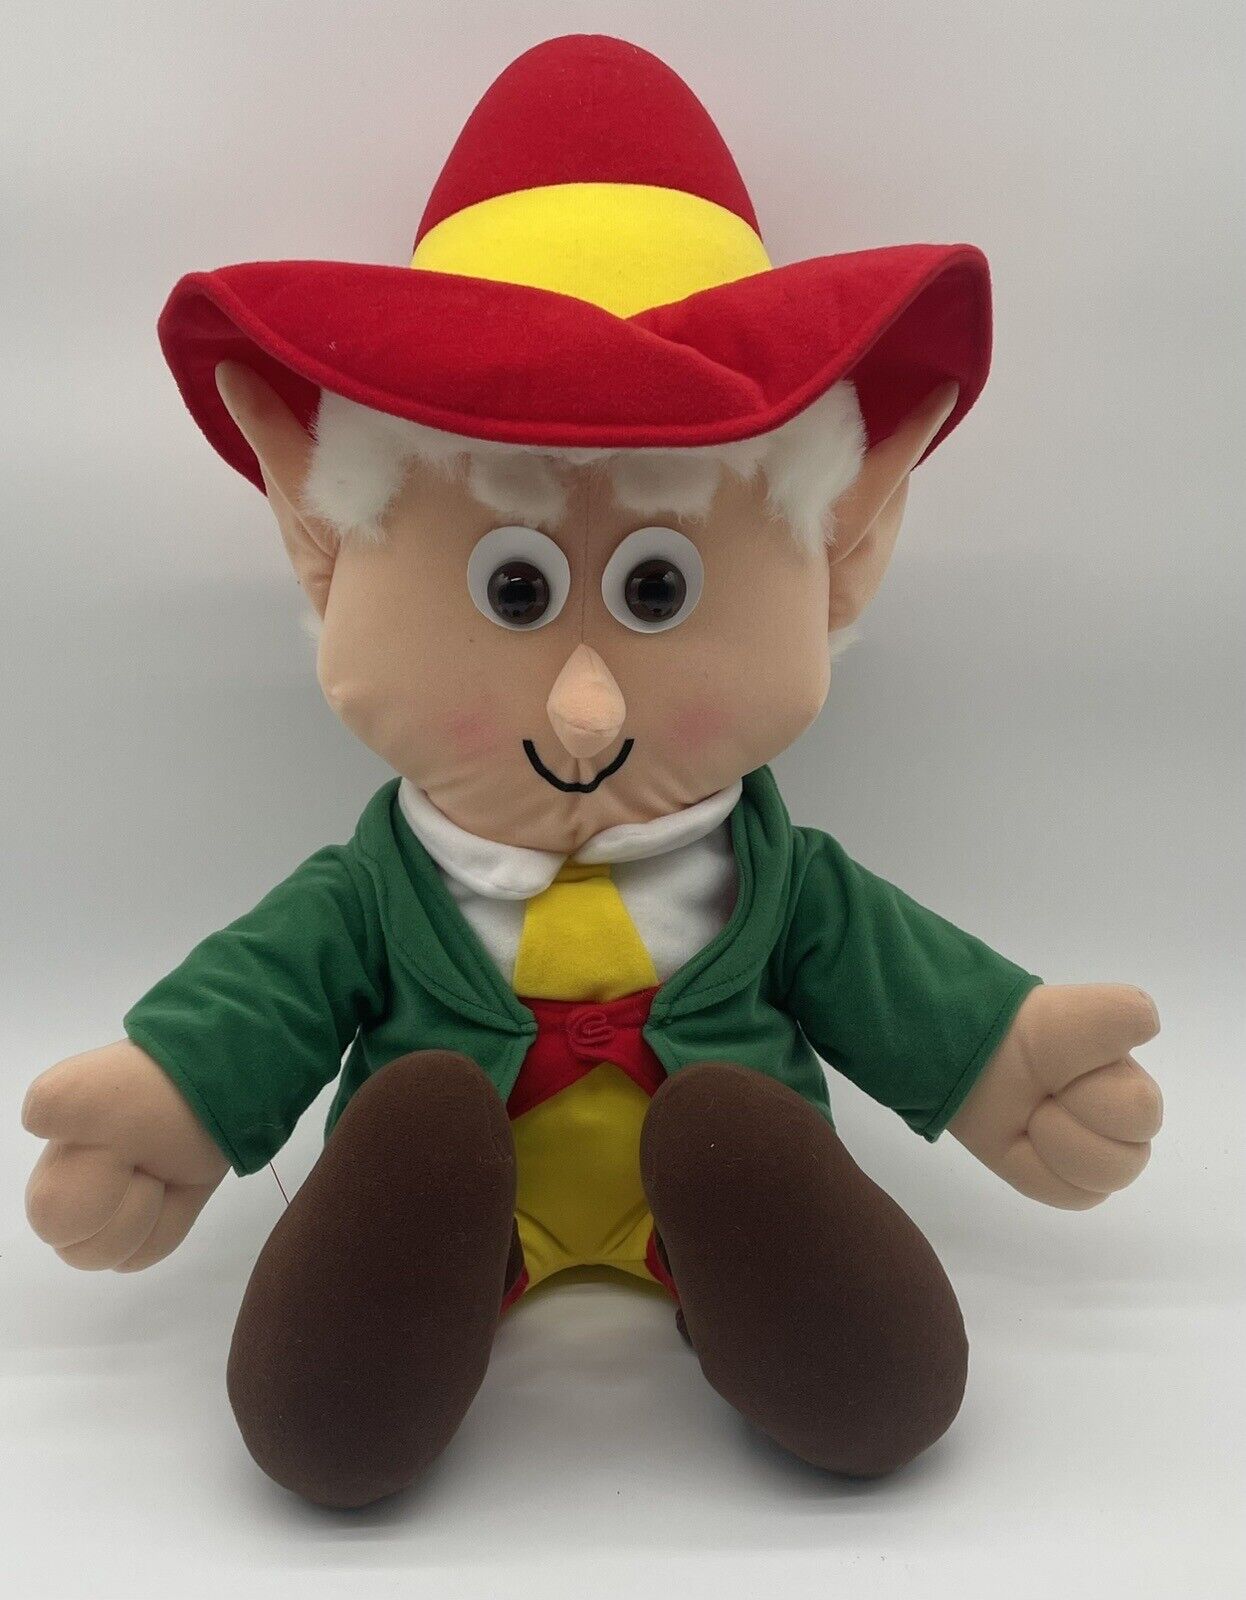 20” Vintage Ernie the Keebler Elf plush doll Stuffed Animal